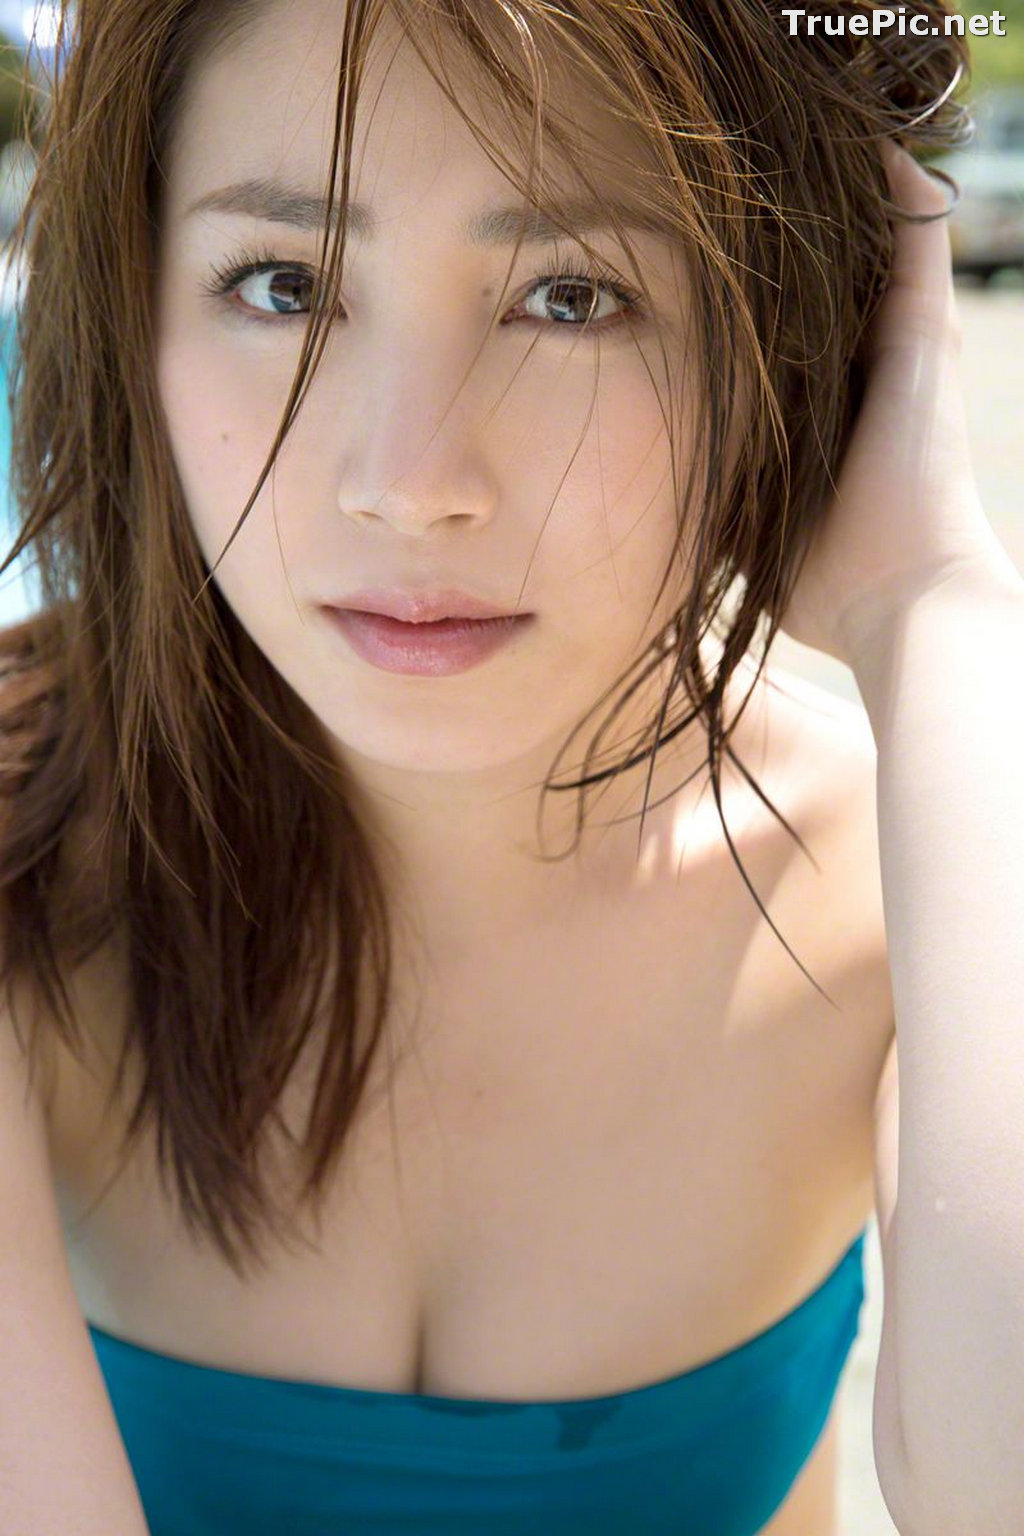 Image [Wanibooks Jacket] No.129 - Japanese Singer and Actress - You Kikkawa - TruePic.net - Picture-127